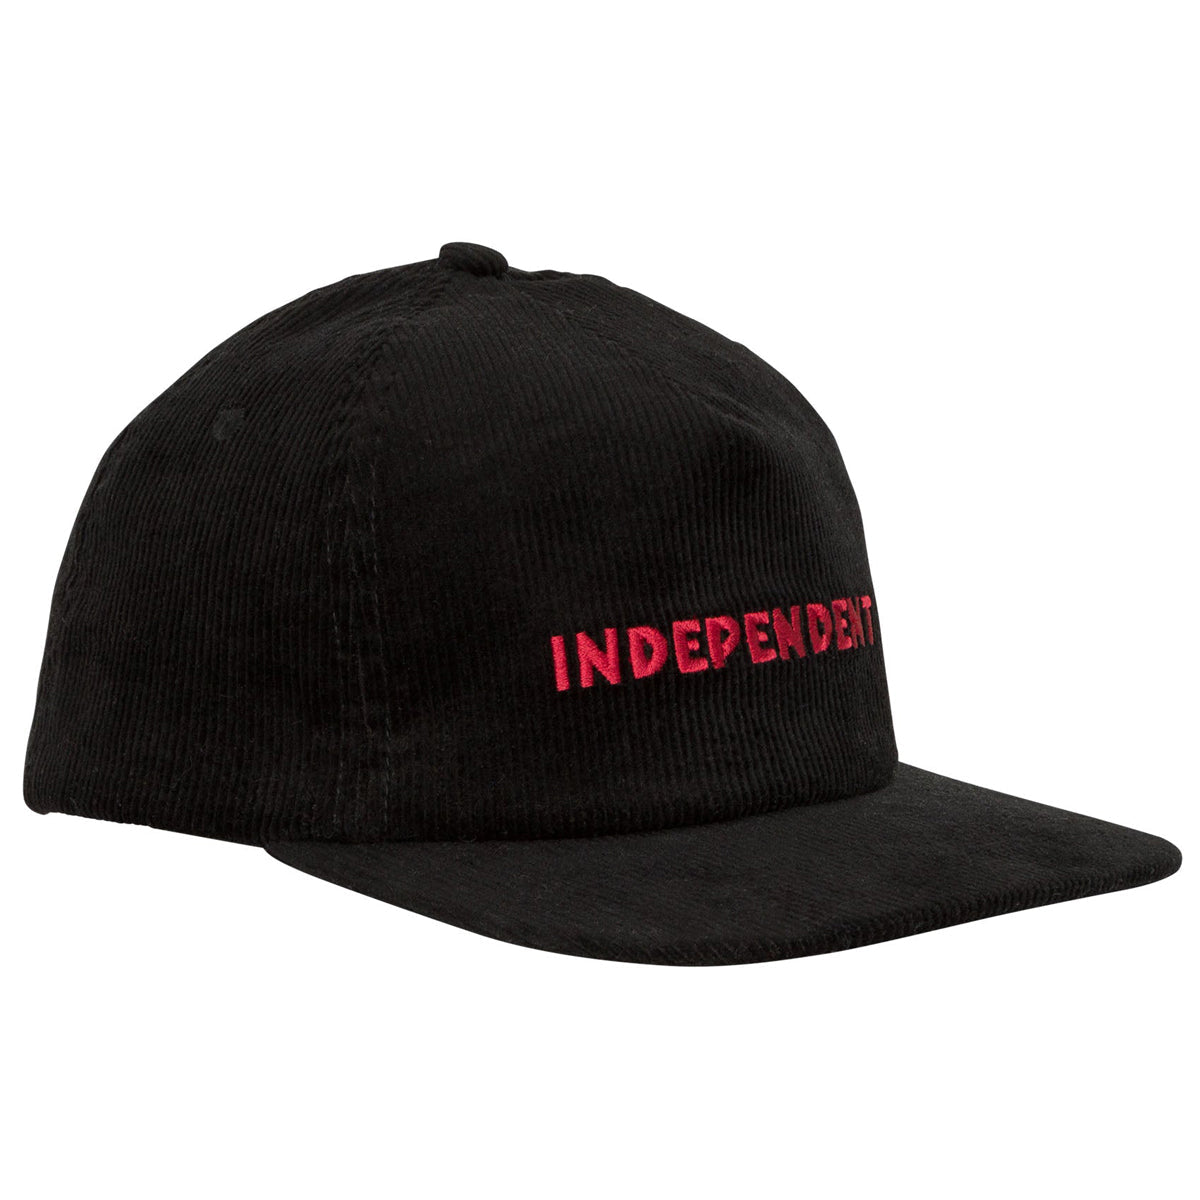 Independent Beacon Snapback Mid Profile Hat - Black image 3